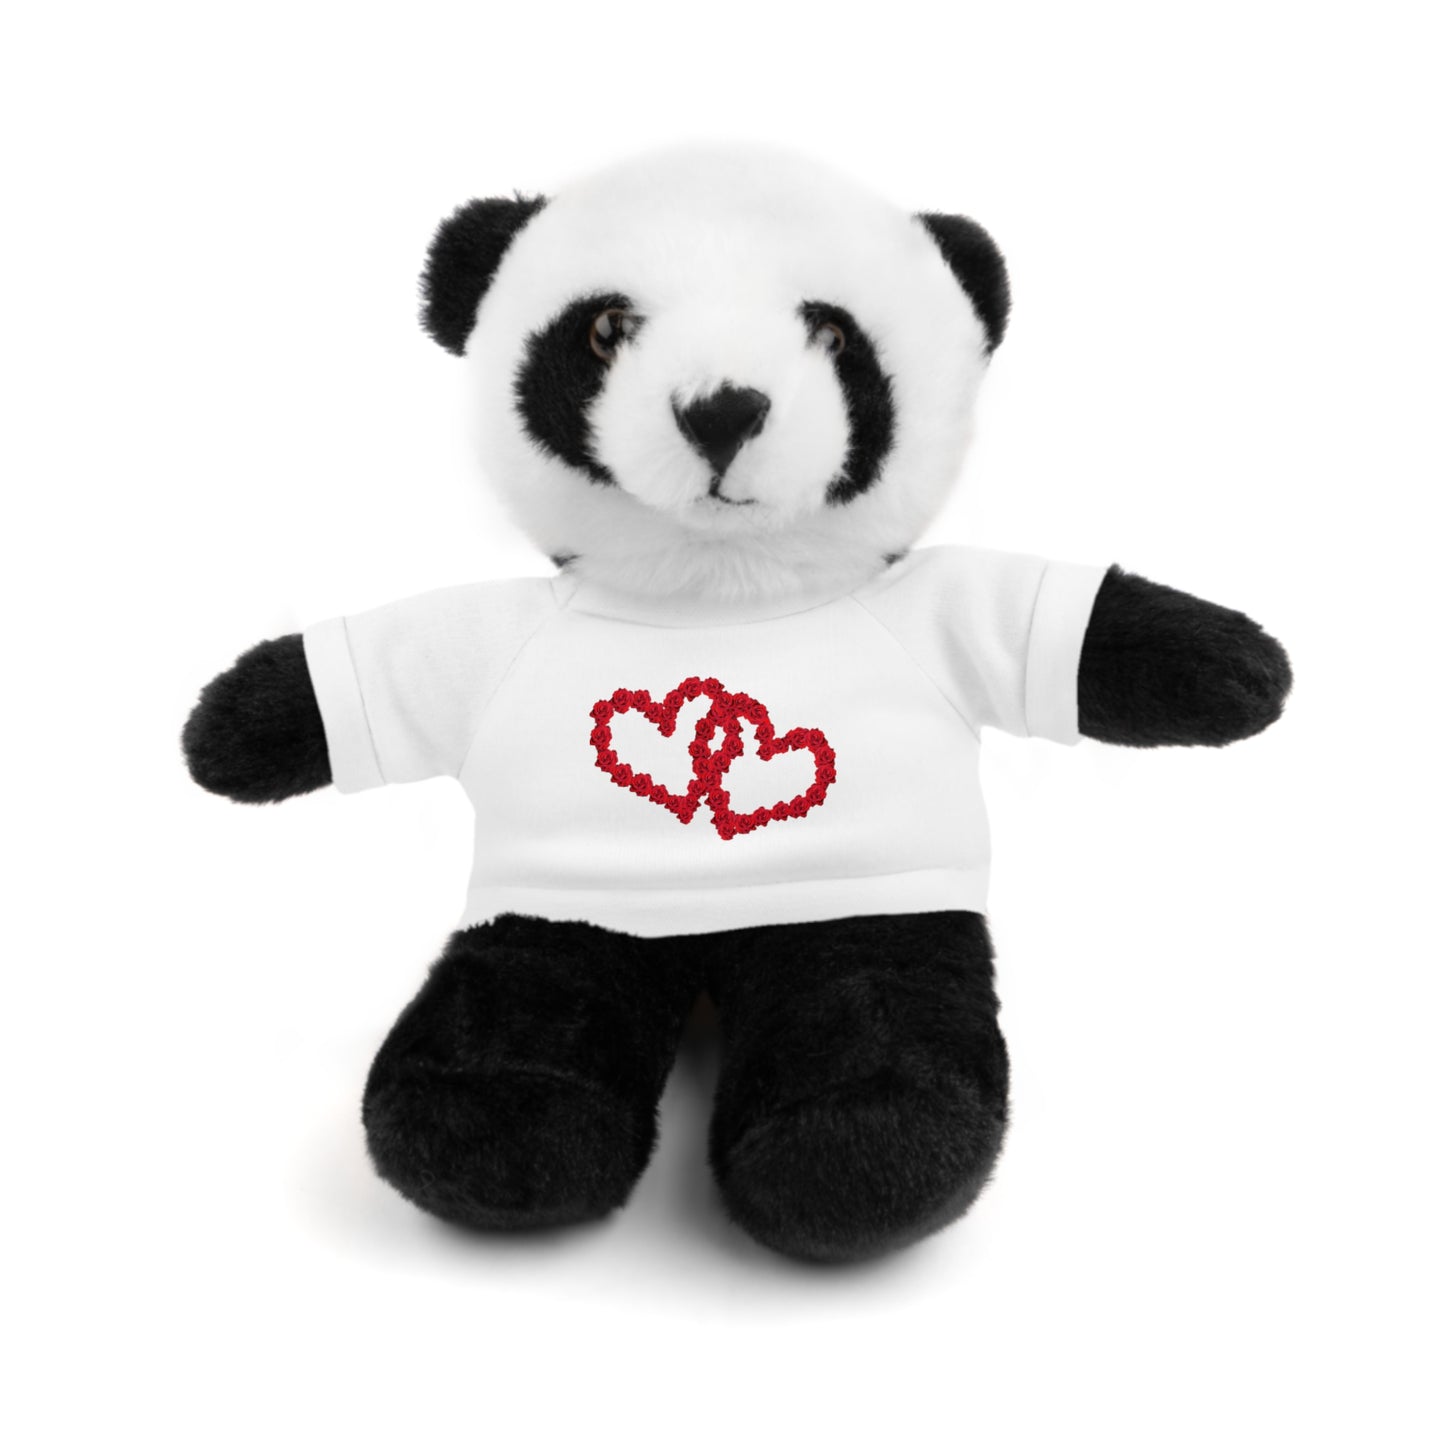 Stuffed Animals with Heart Tee, Pick a Panda, Lion, Bear, Bunny, Jaguar, or a Sheep